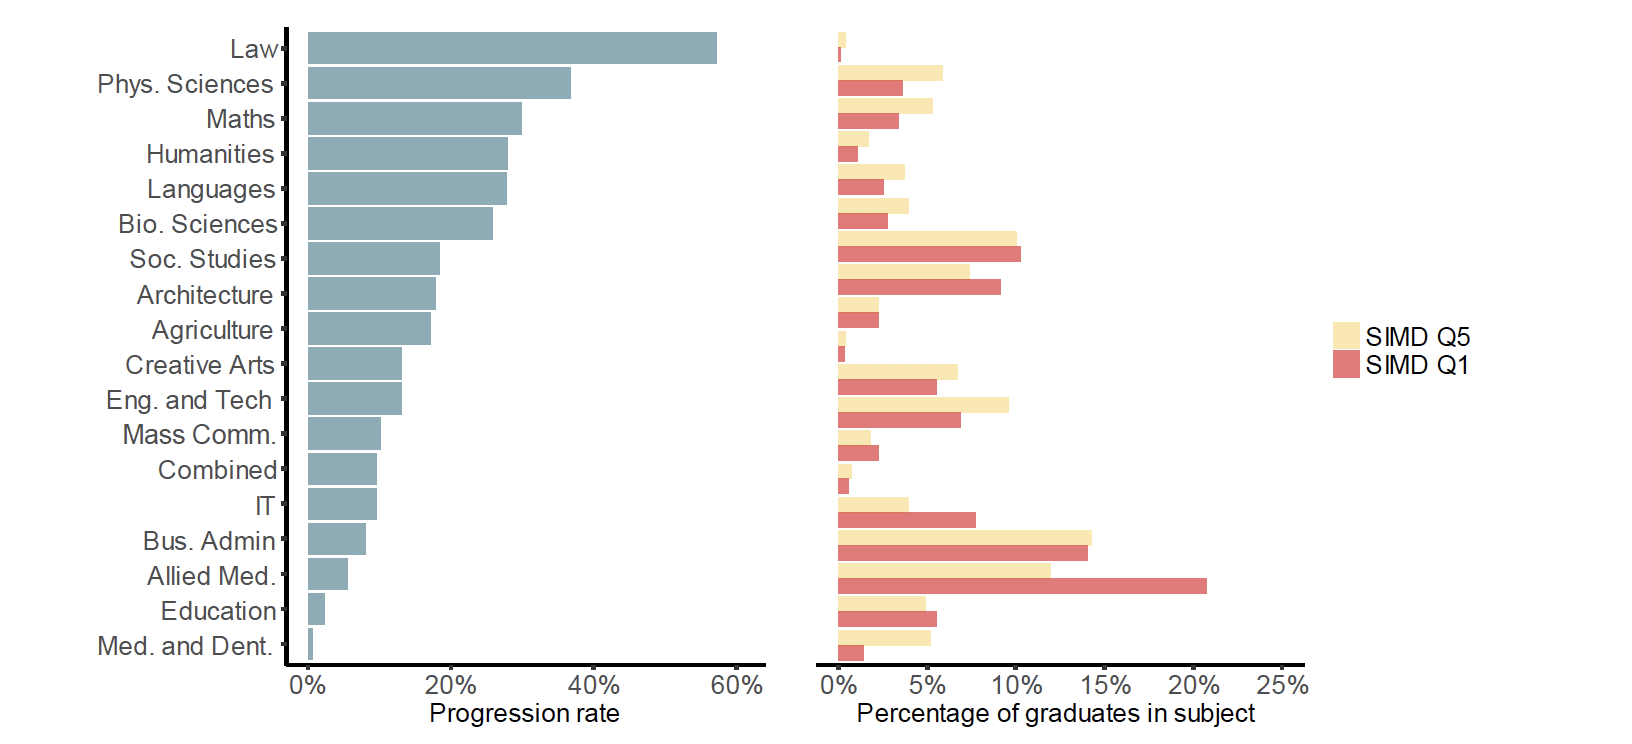 Figure 3 (left): Percentage of first degree graduates progressing to postgraduate study, by subject 

Figure 4 (right): Subject distribution of first degree graduates, by SIMD quintile (Q1/Q5)